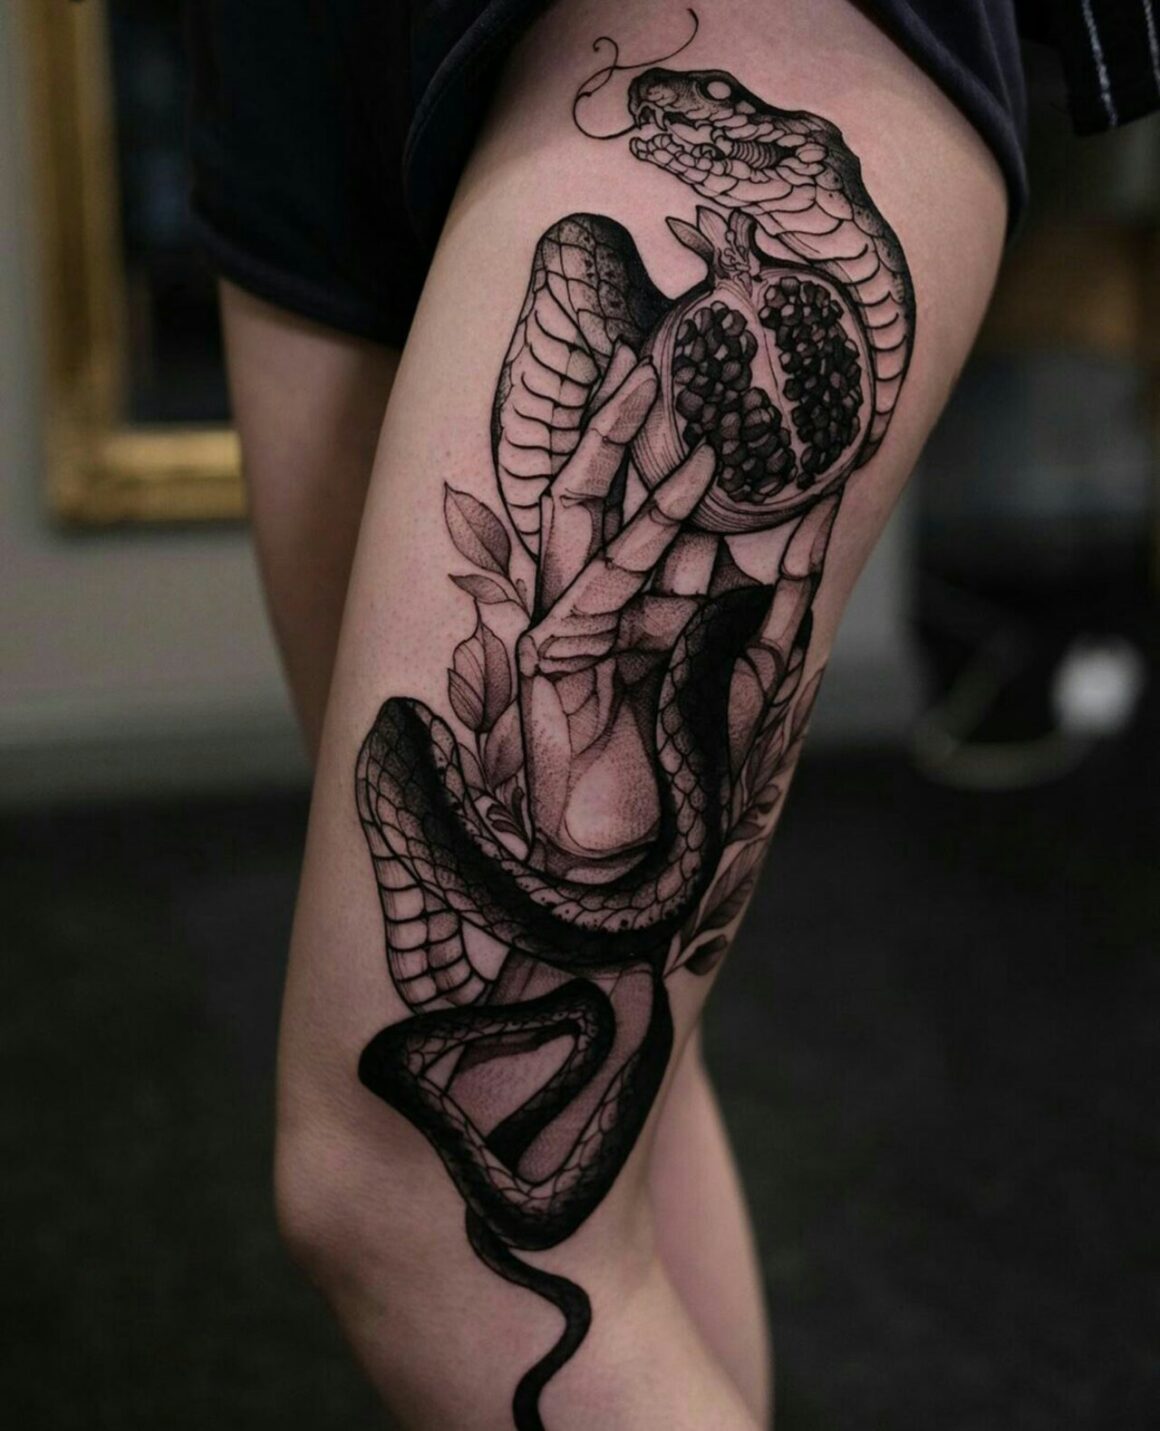 Fredao Oliveira, Inkonik Tattoo Studio, Belo Horizonte, Brazil